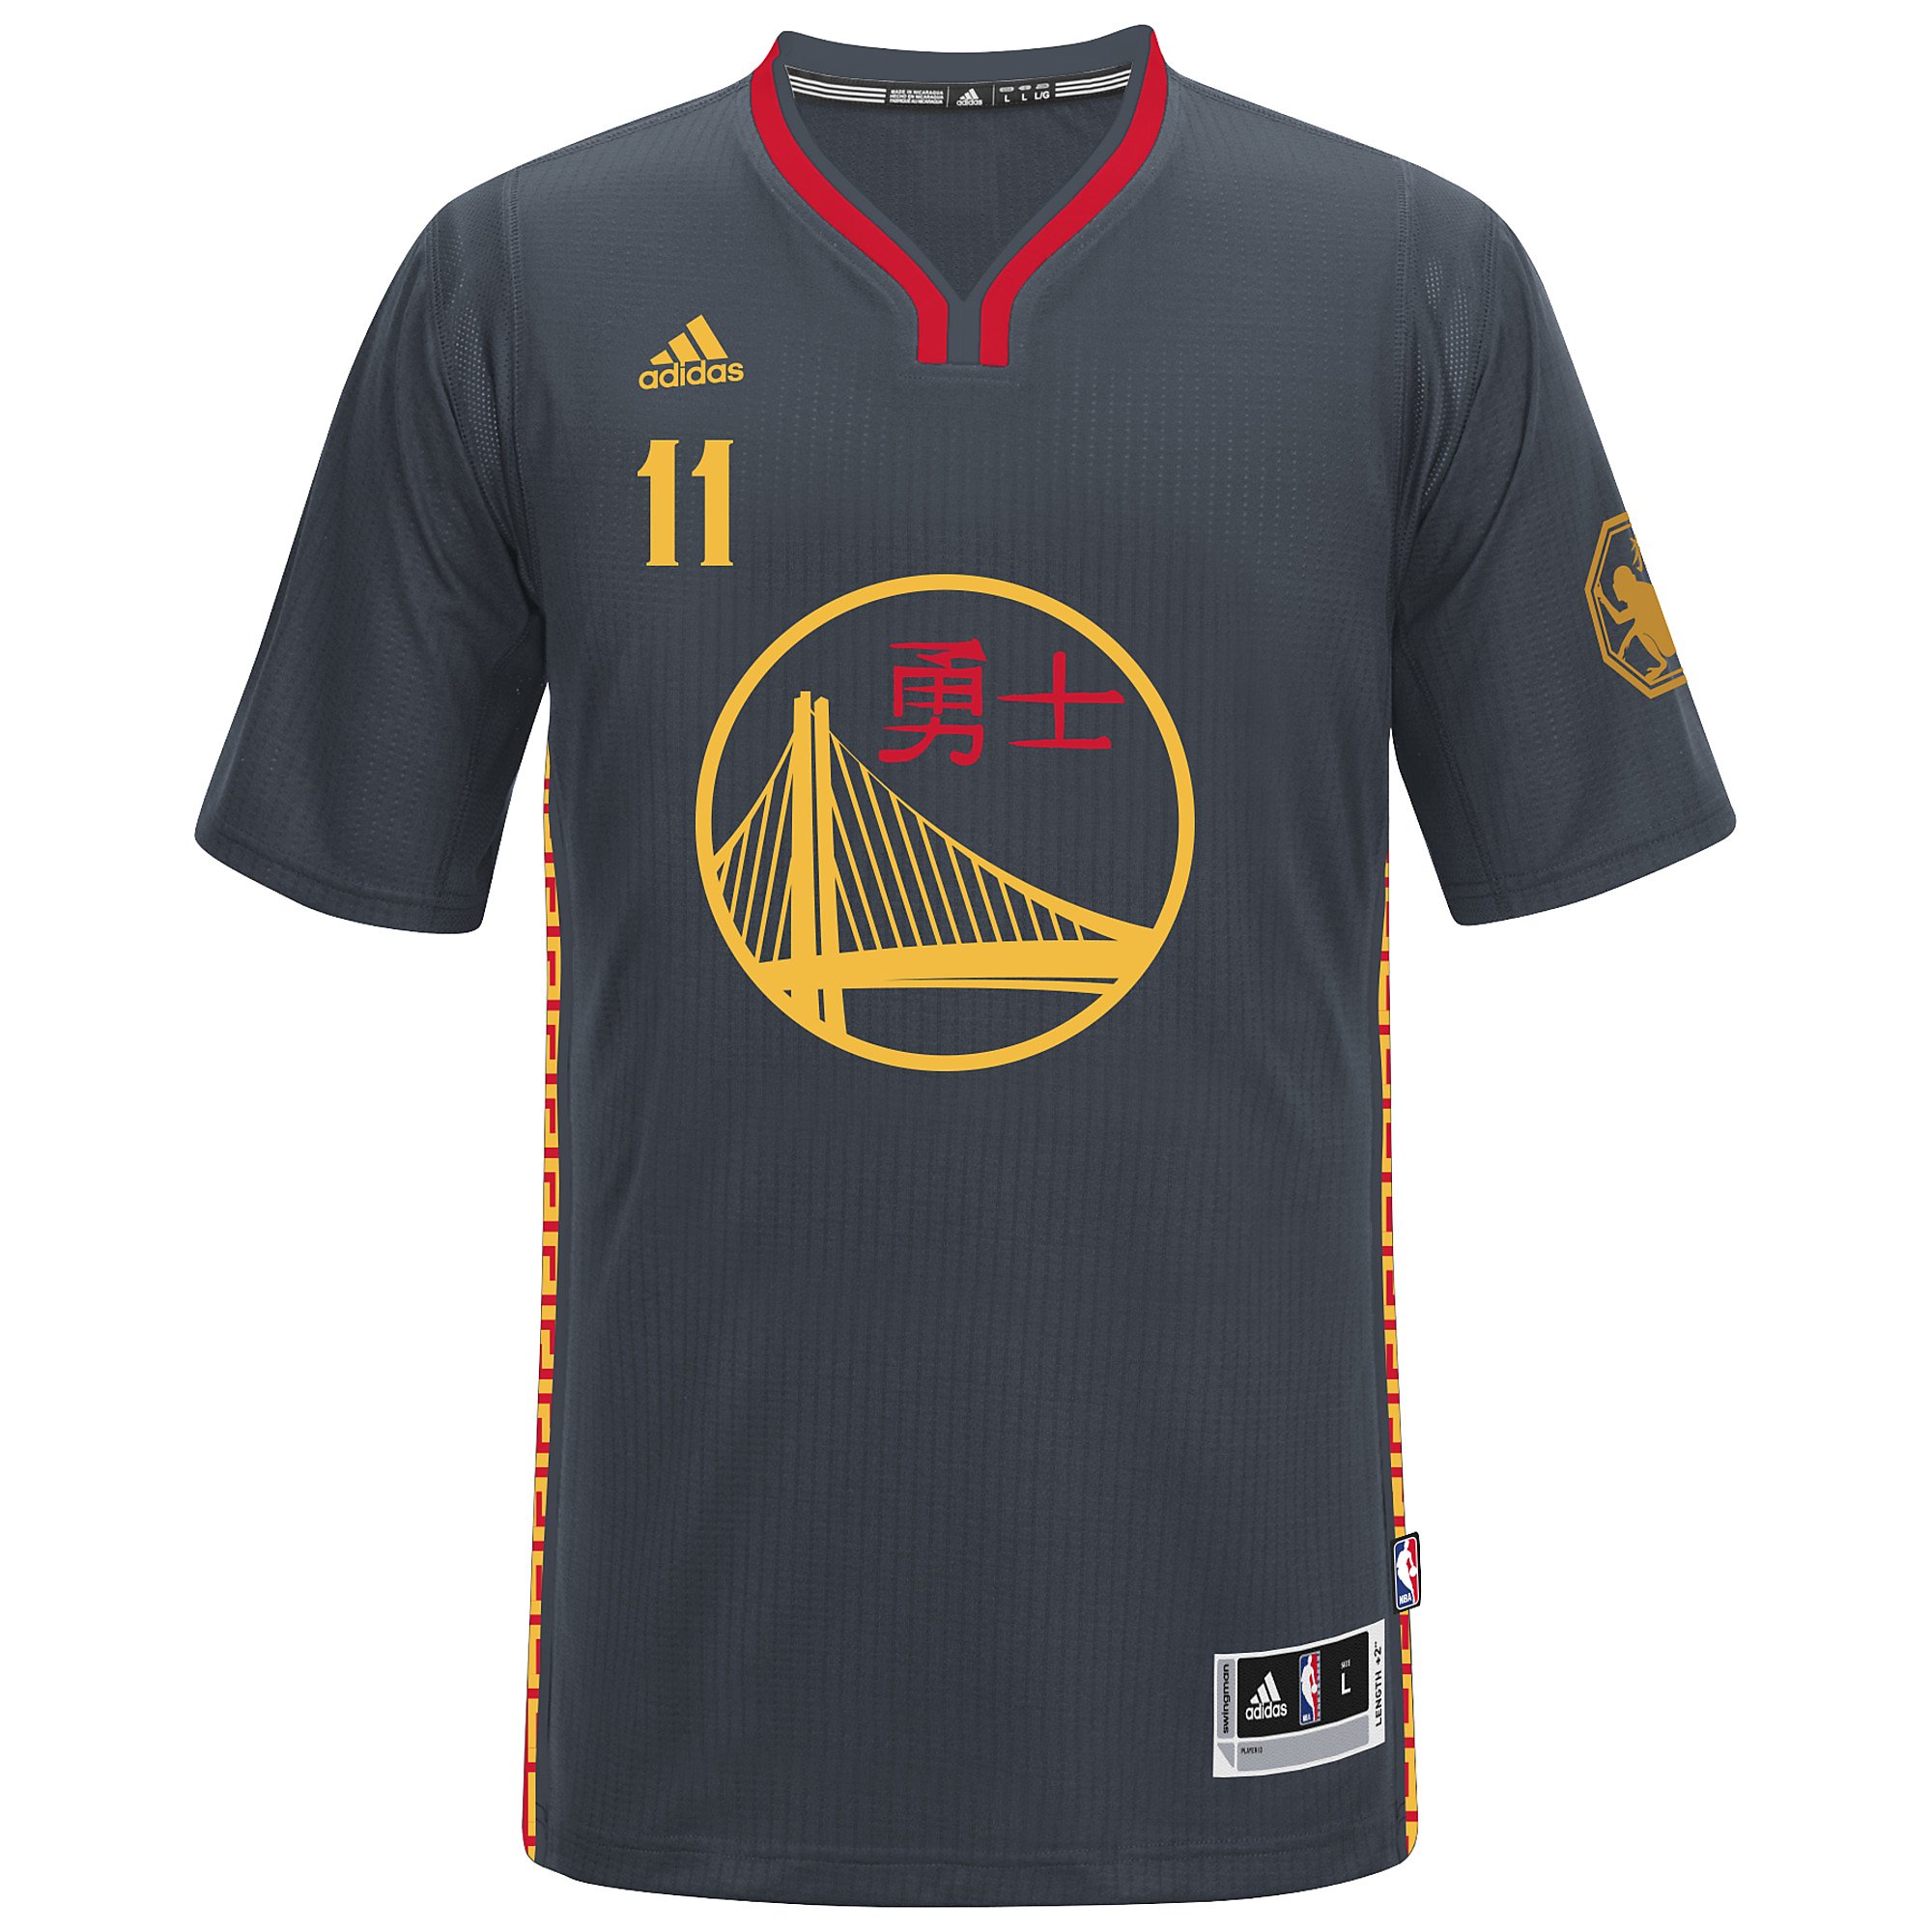 Warriors unveil new Chinese Heritage alternate uniforms